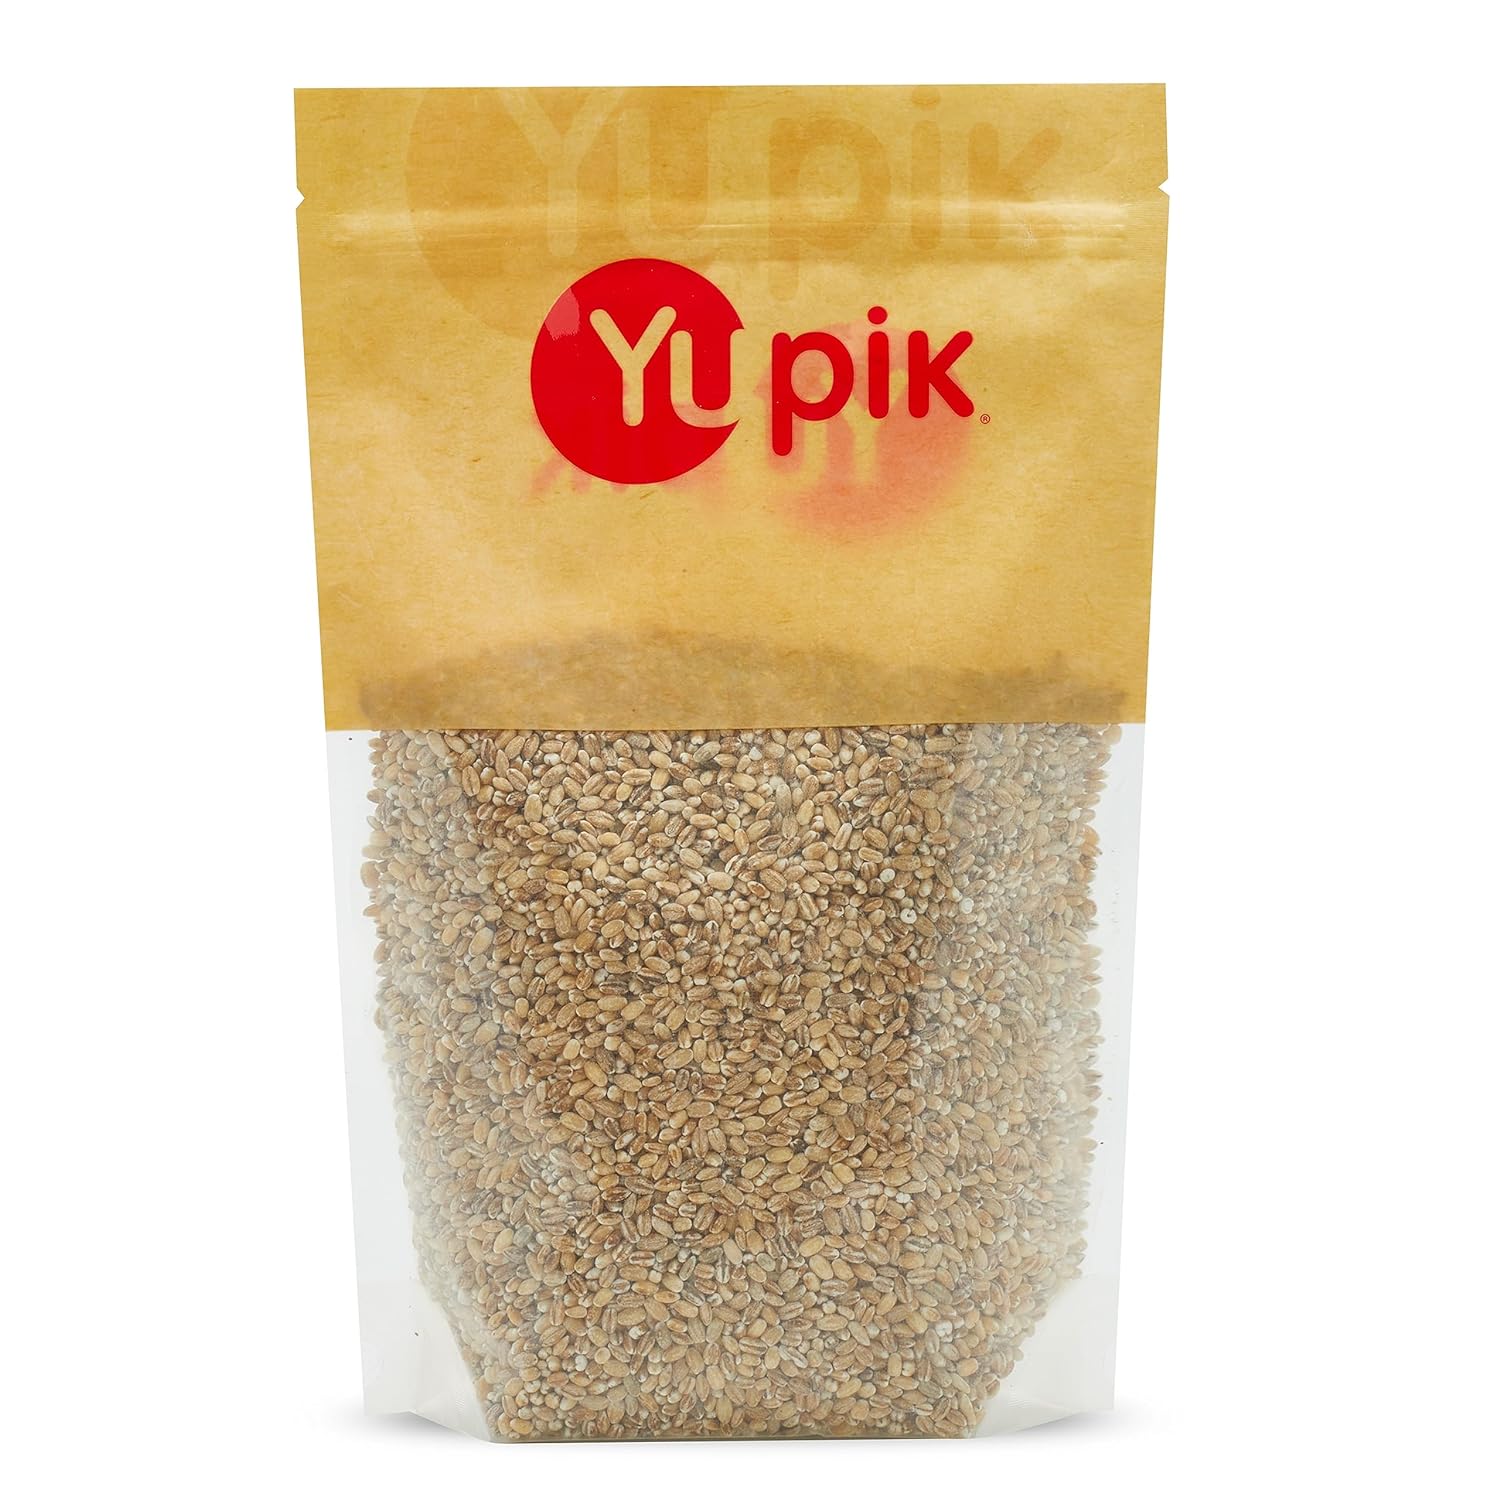 Yupik Pot Barley, 2.2 lb, Whole Grain, Non-GMO, Vegan